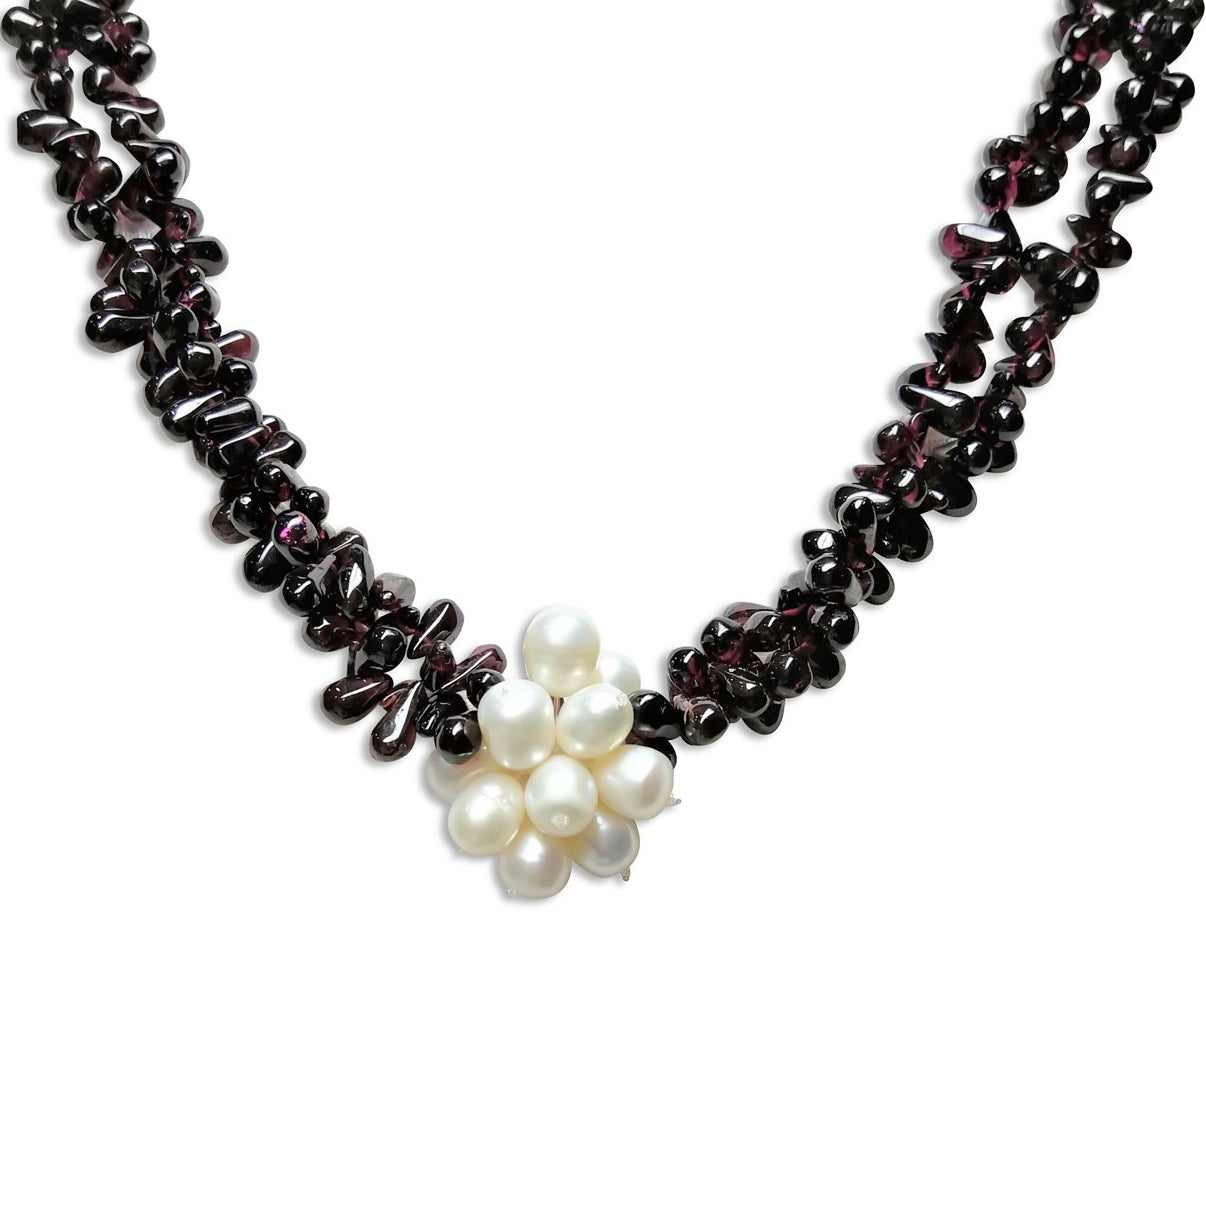 Natural Handmade Necklace 16"-18" Pear Drop Garnet Pearls Gemstone Beads Jewelry